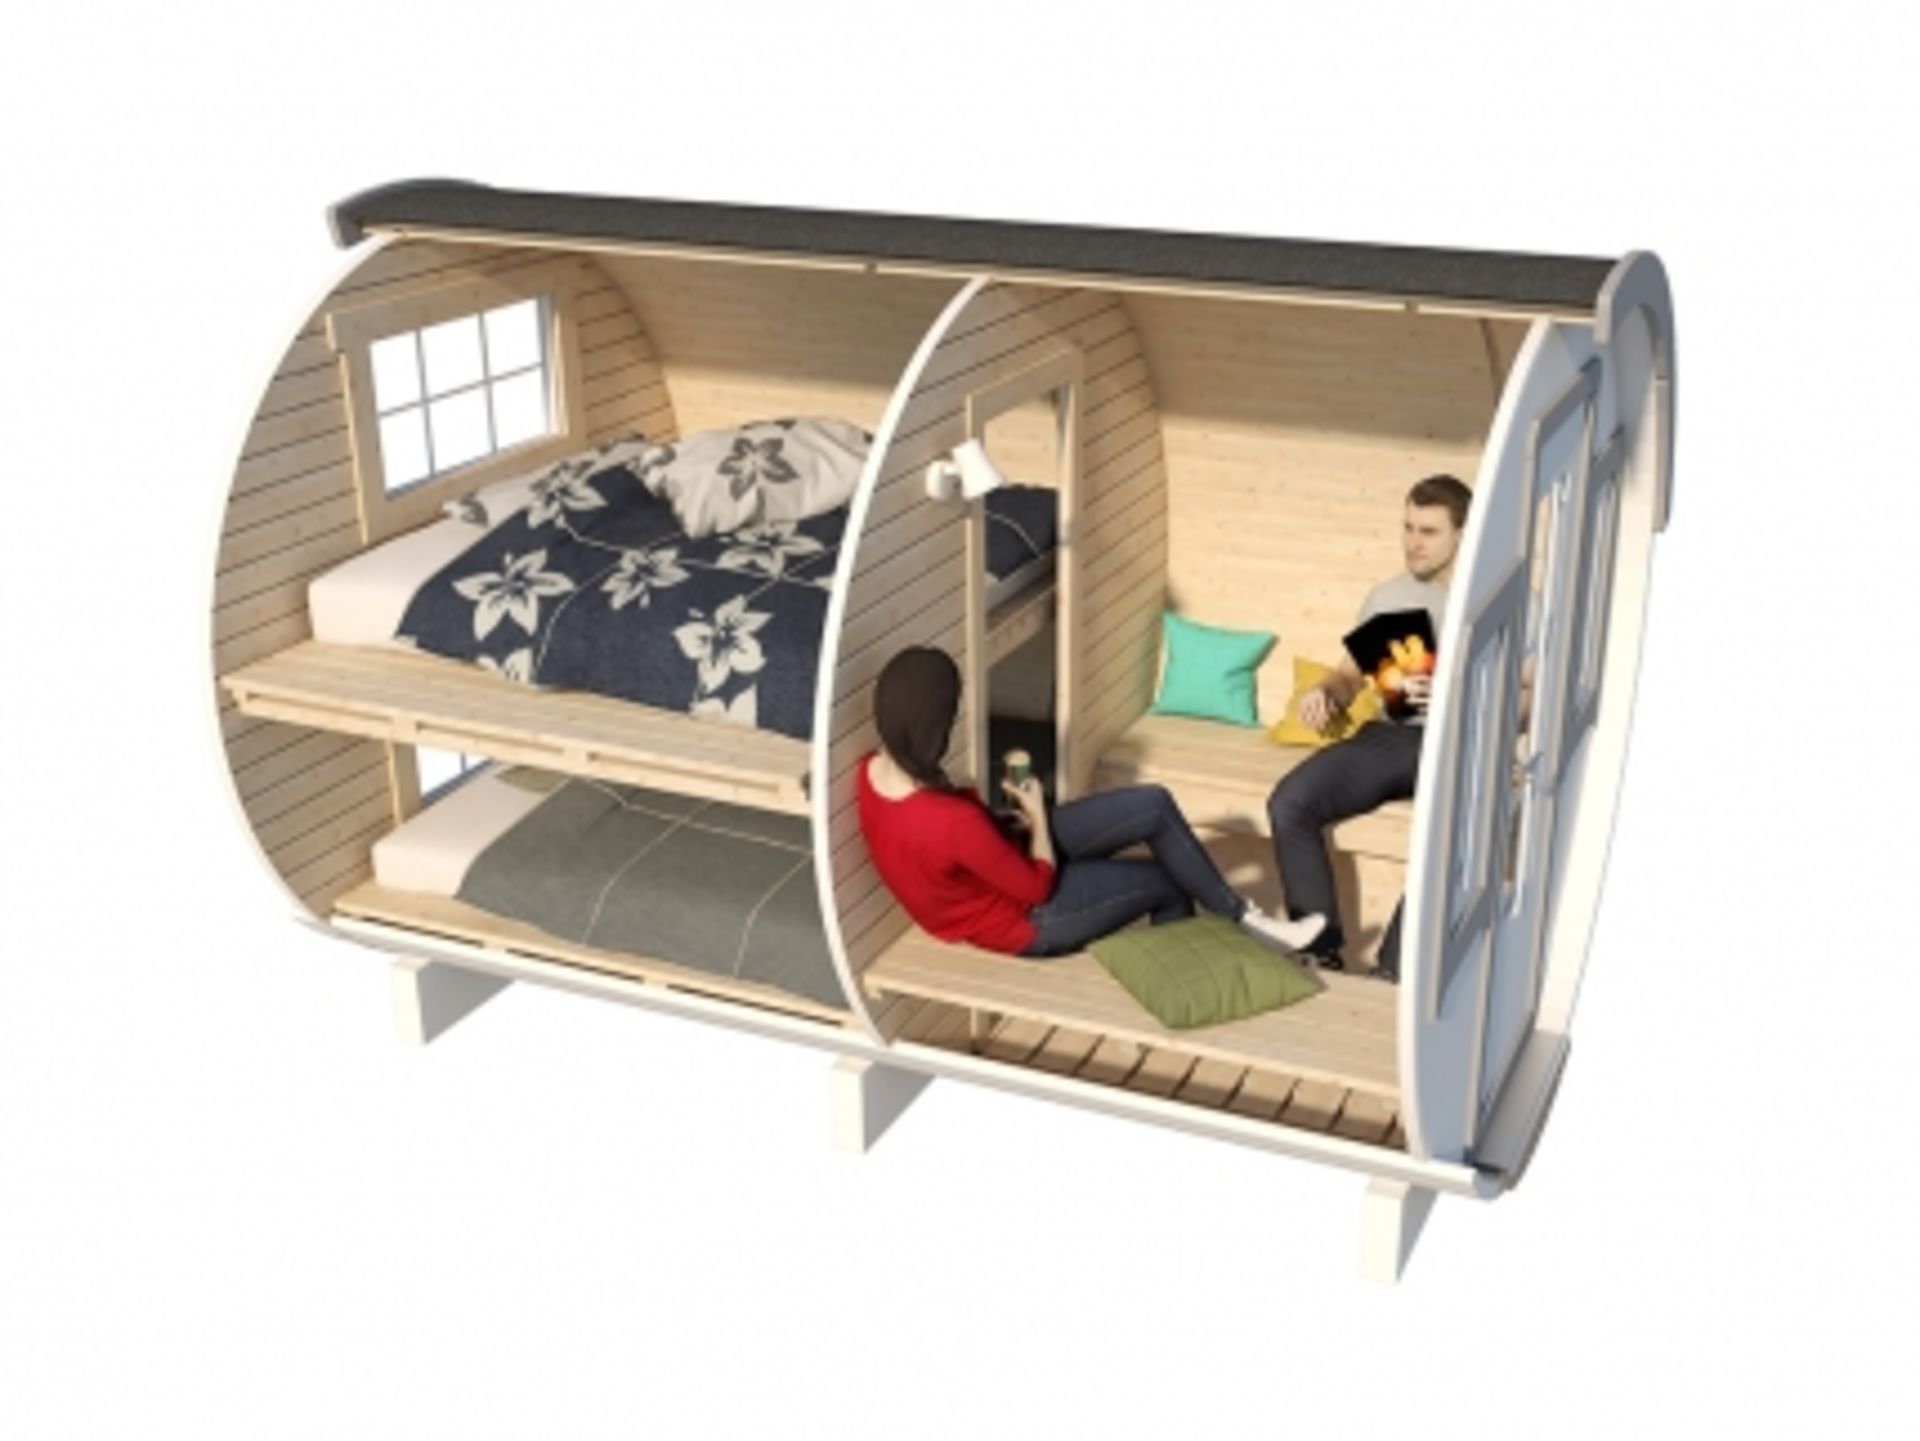 V Brand New 2.2 x 3.3m Barrel For Sleeping - Sleeping & Sitting Rooms Inside - Sleeping Room With - Bild 3 aus 4